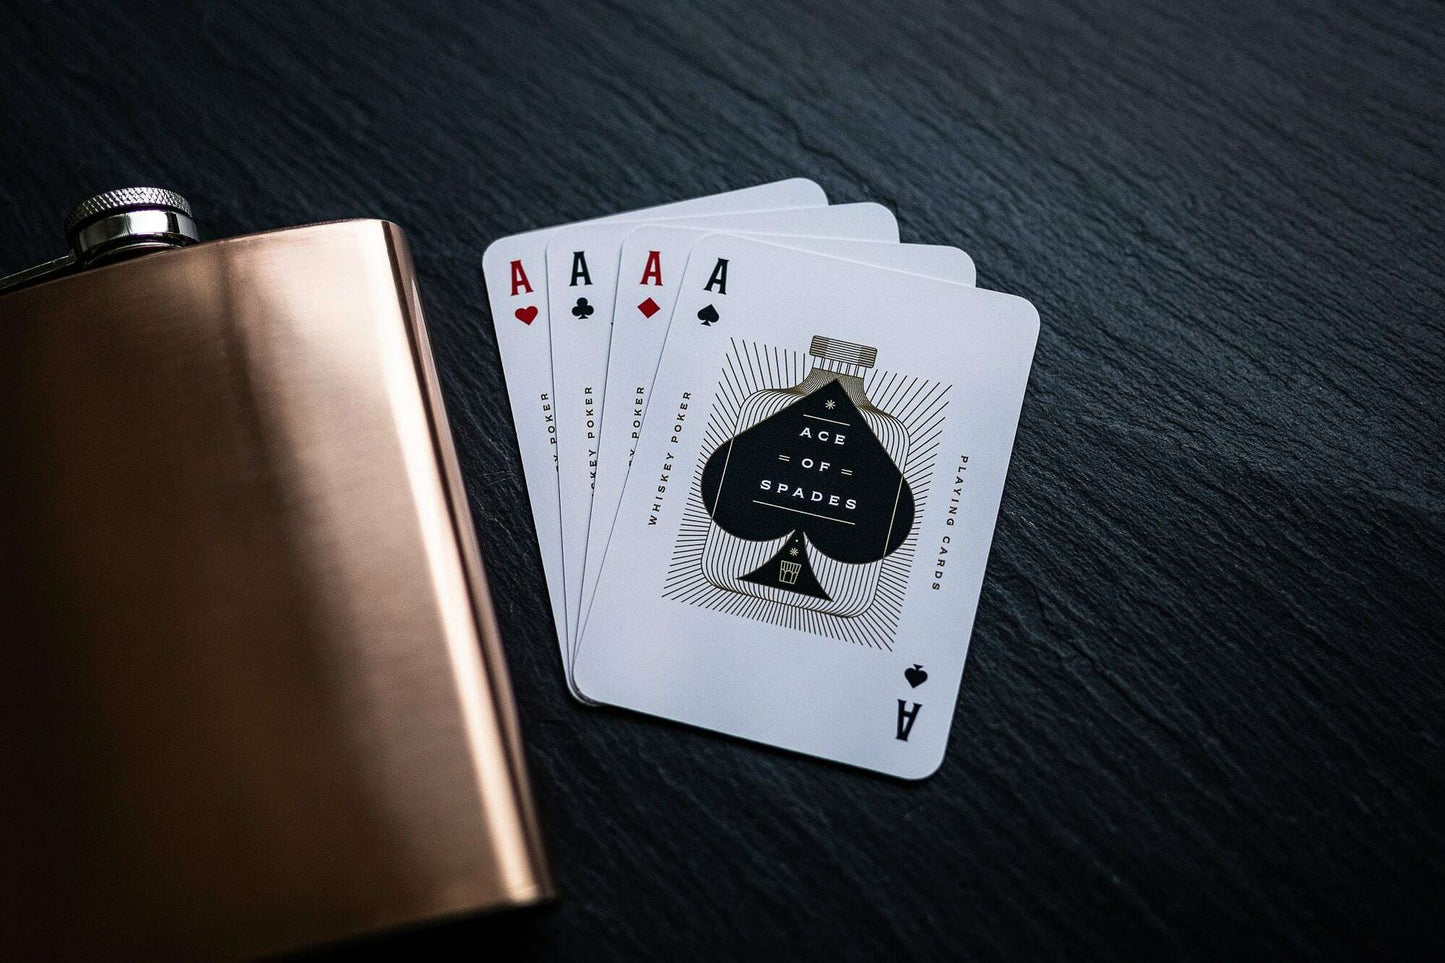 PlayingCardDecks.com-Whiskey Poker Playing Cards